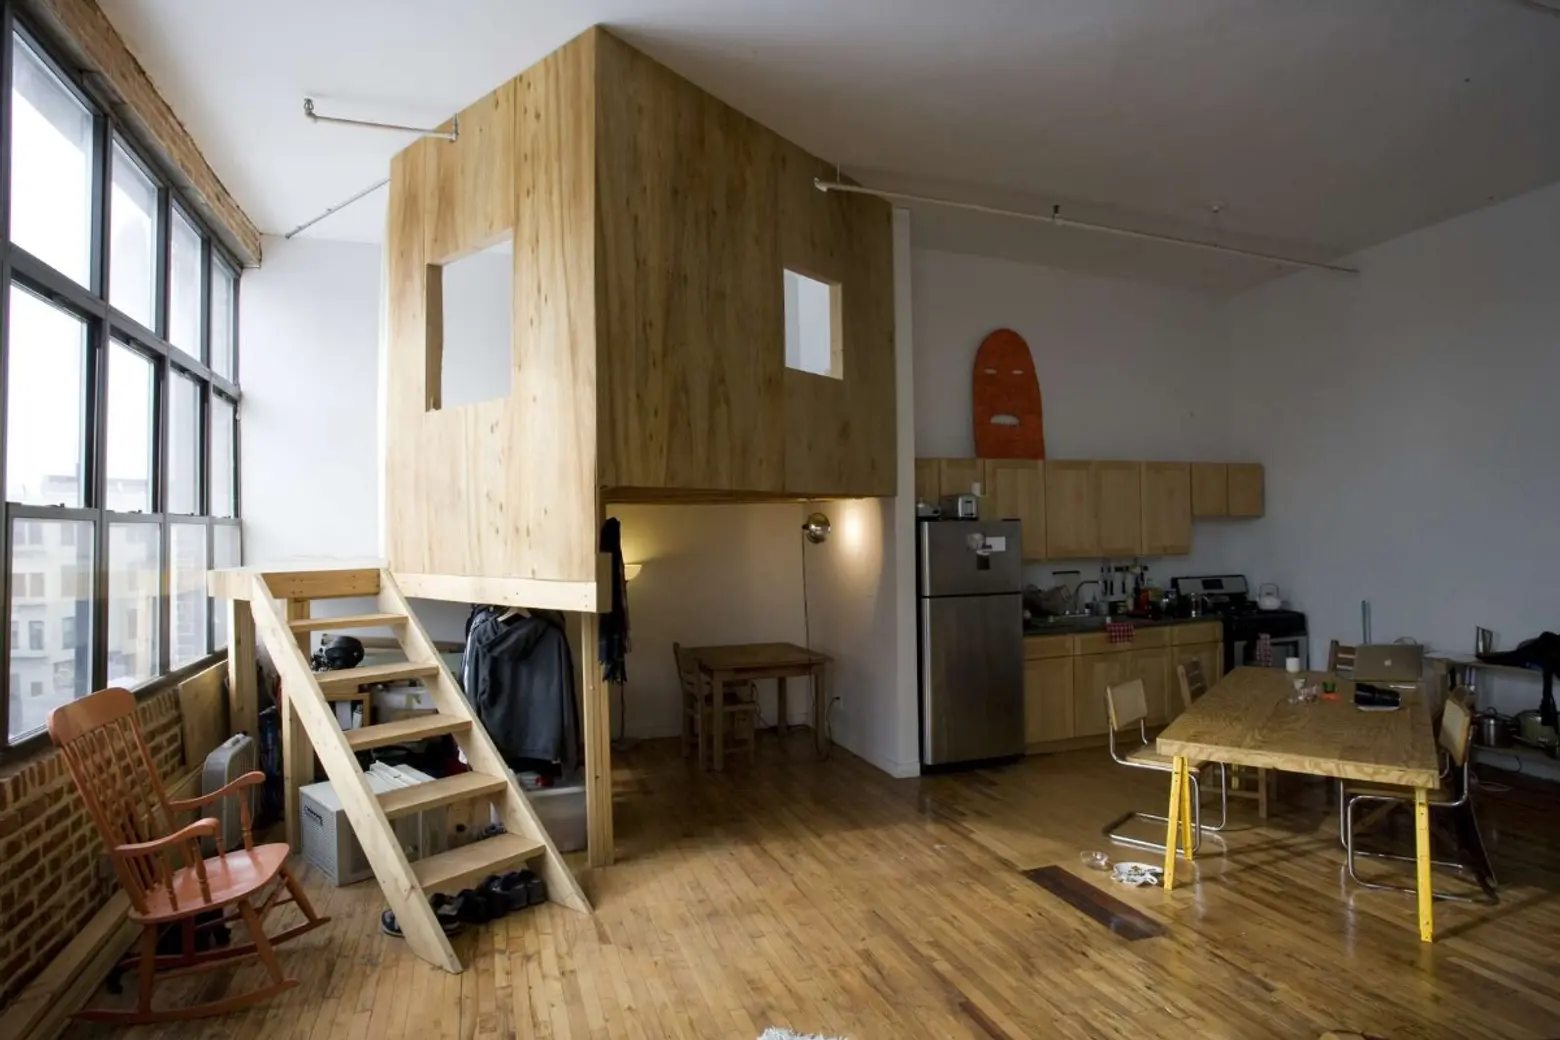 Terri Chiao and Adam Frezzo, A Cabin in A Loft, Brooklyn arist spaces, indoor treehouse